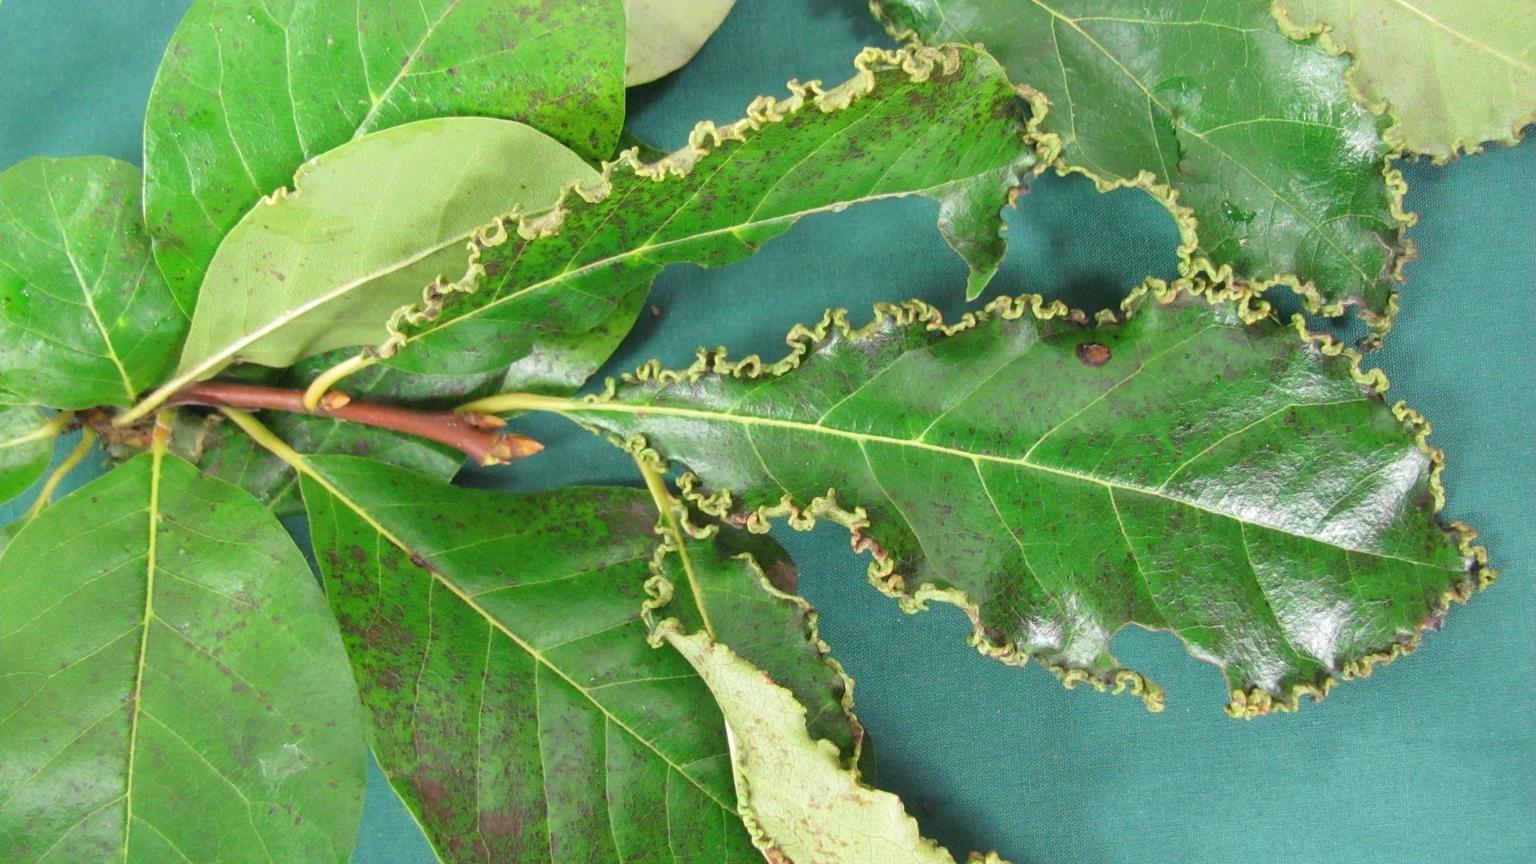 eriophiid mite damage on leaves